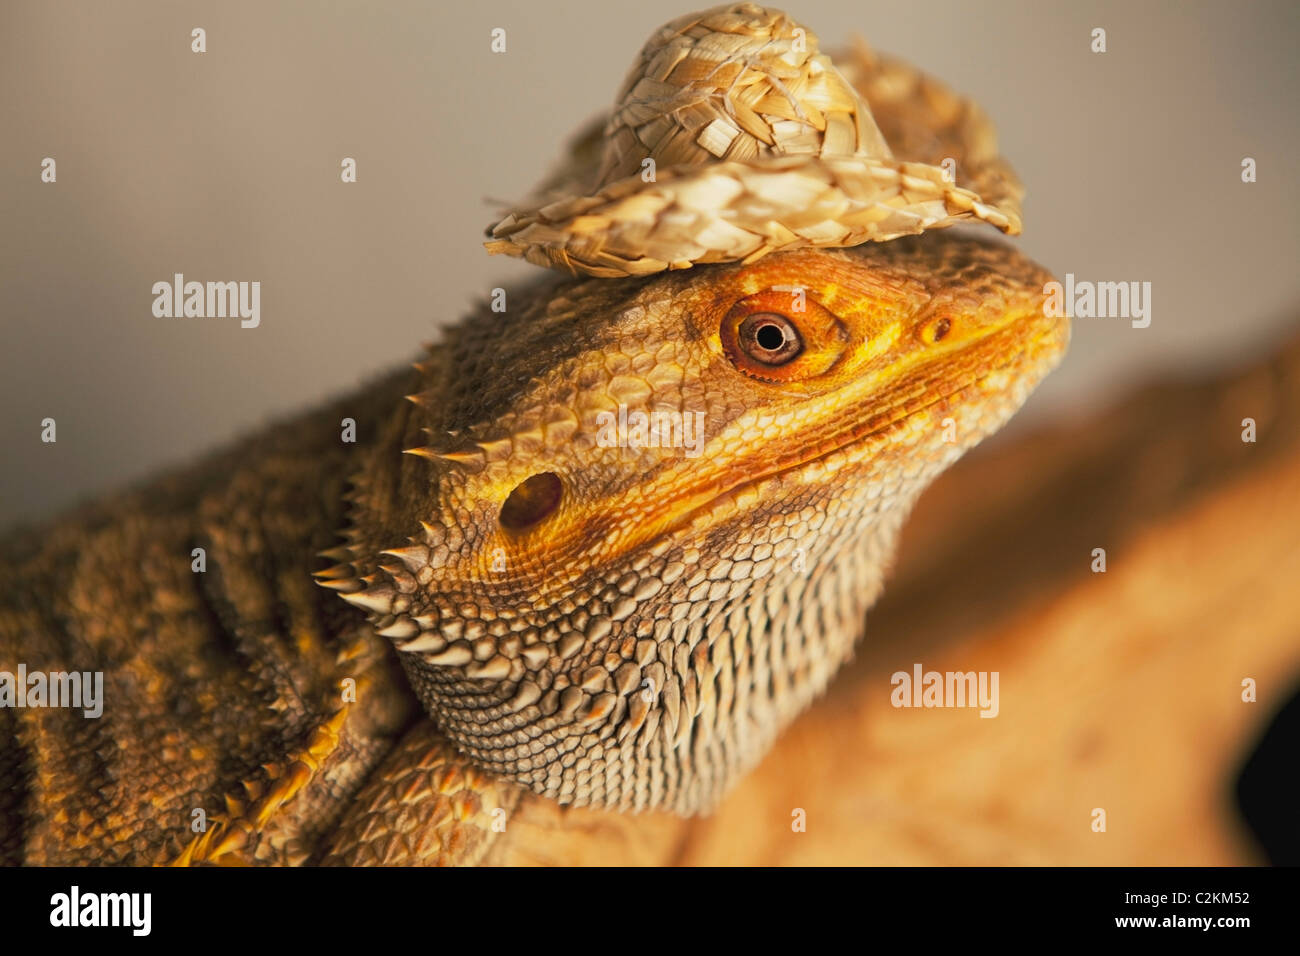 Lizard Wearing A Cowboy Hat Stock Photo